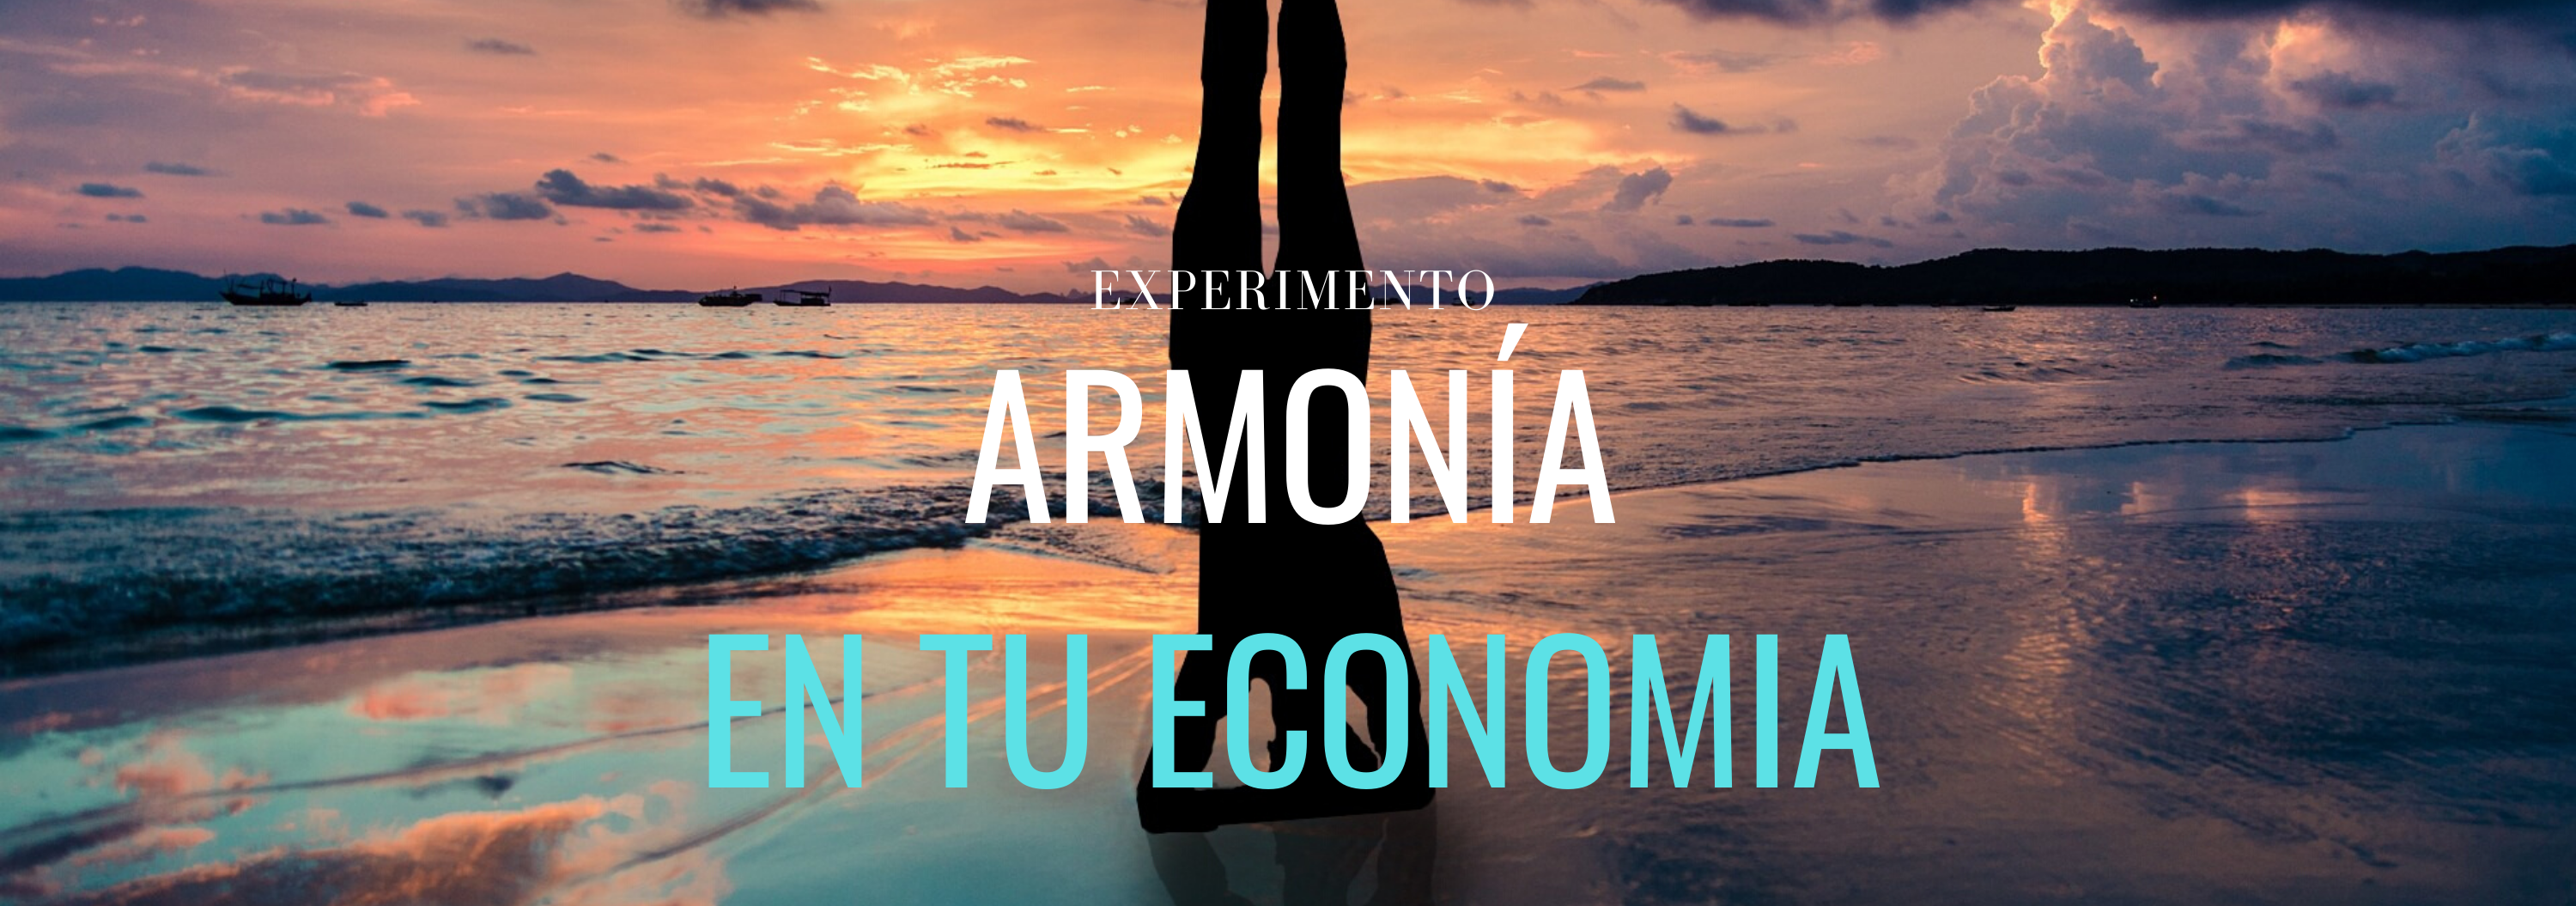 armonia en tu economia